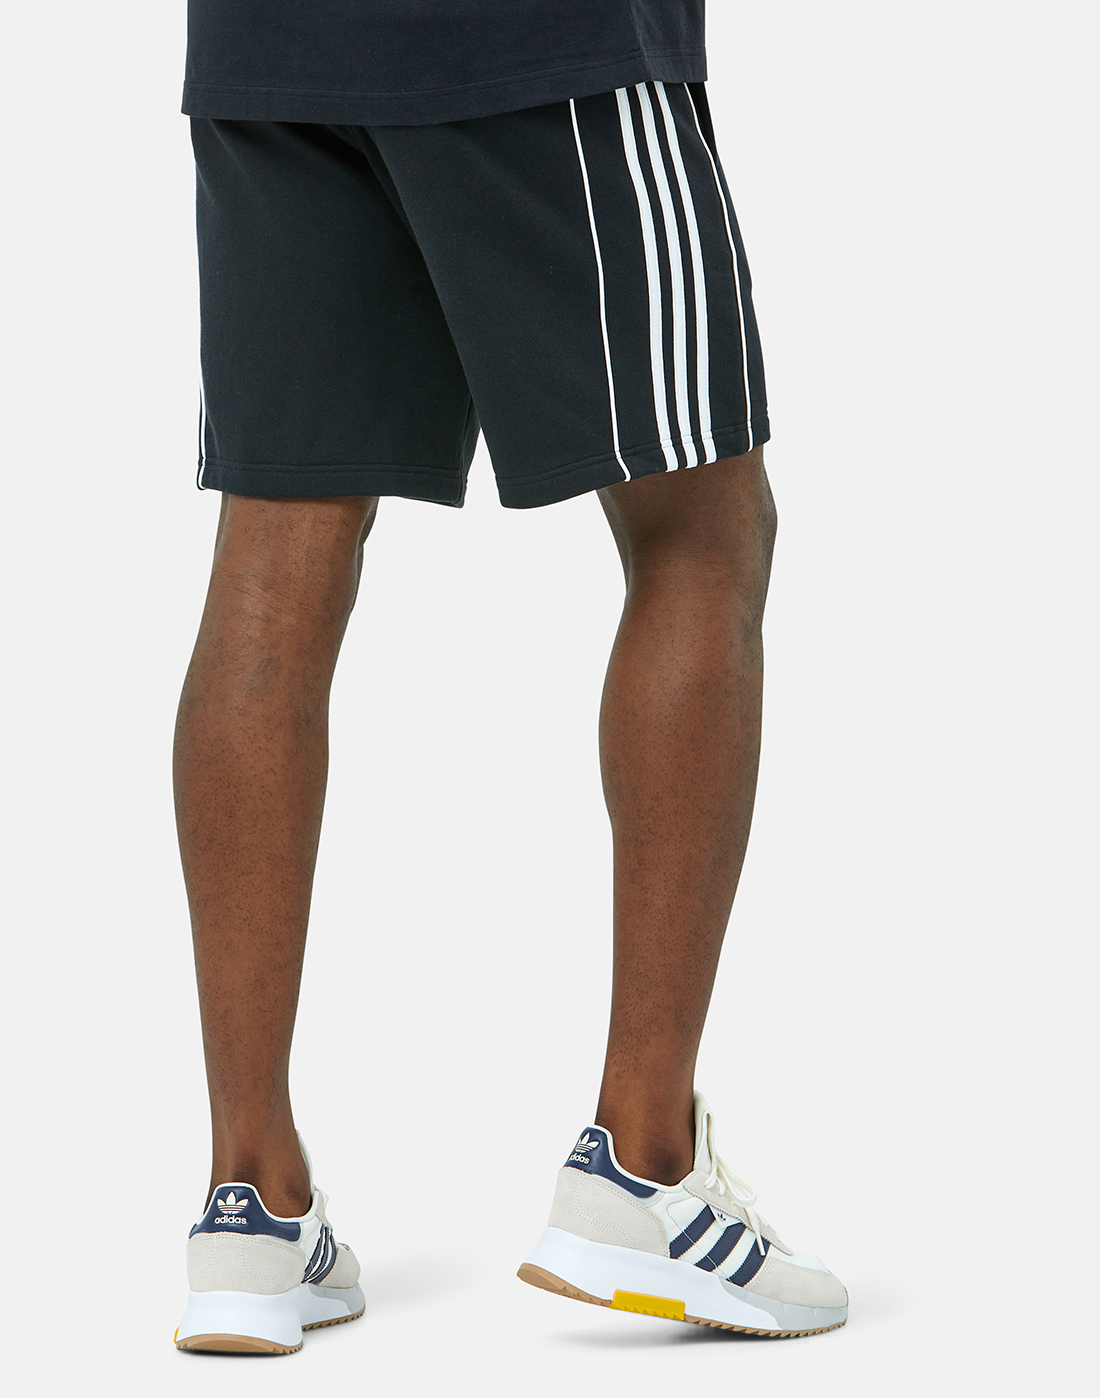 adidas Originals Mens Rekive Shorts - Black | Life Style Sports UK